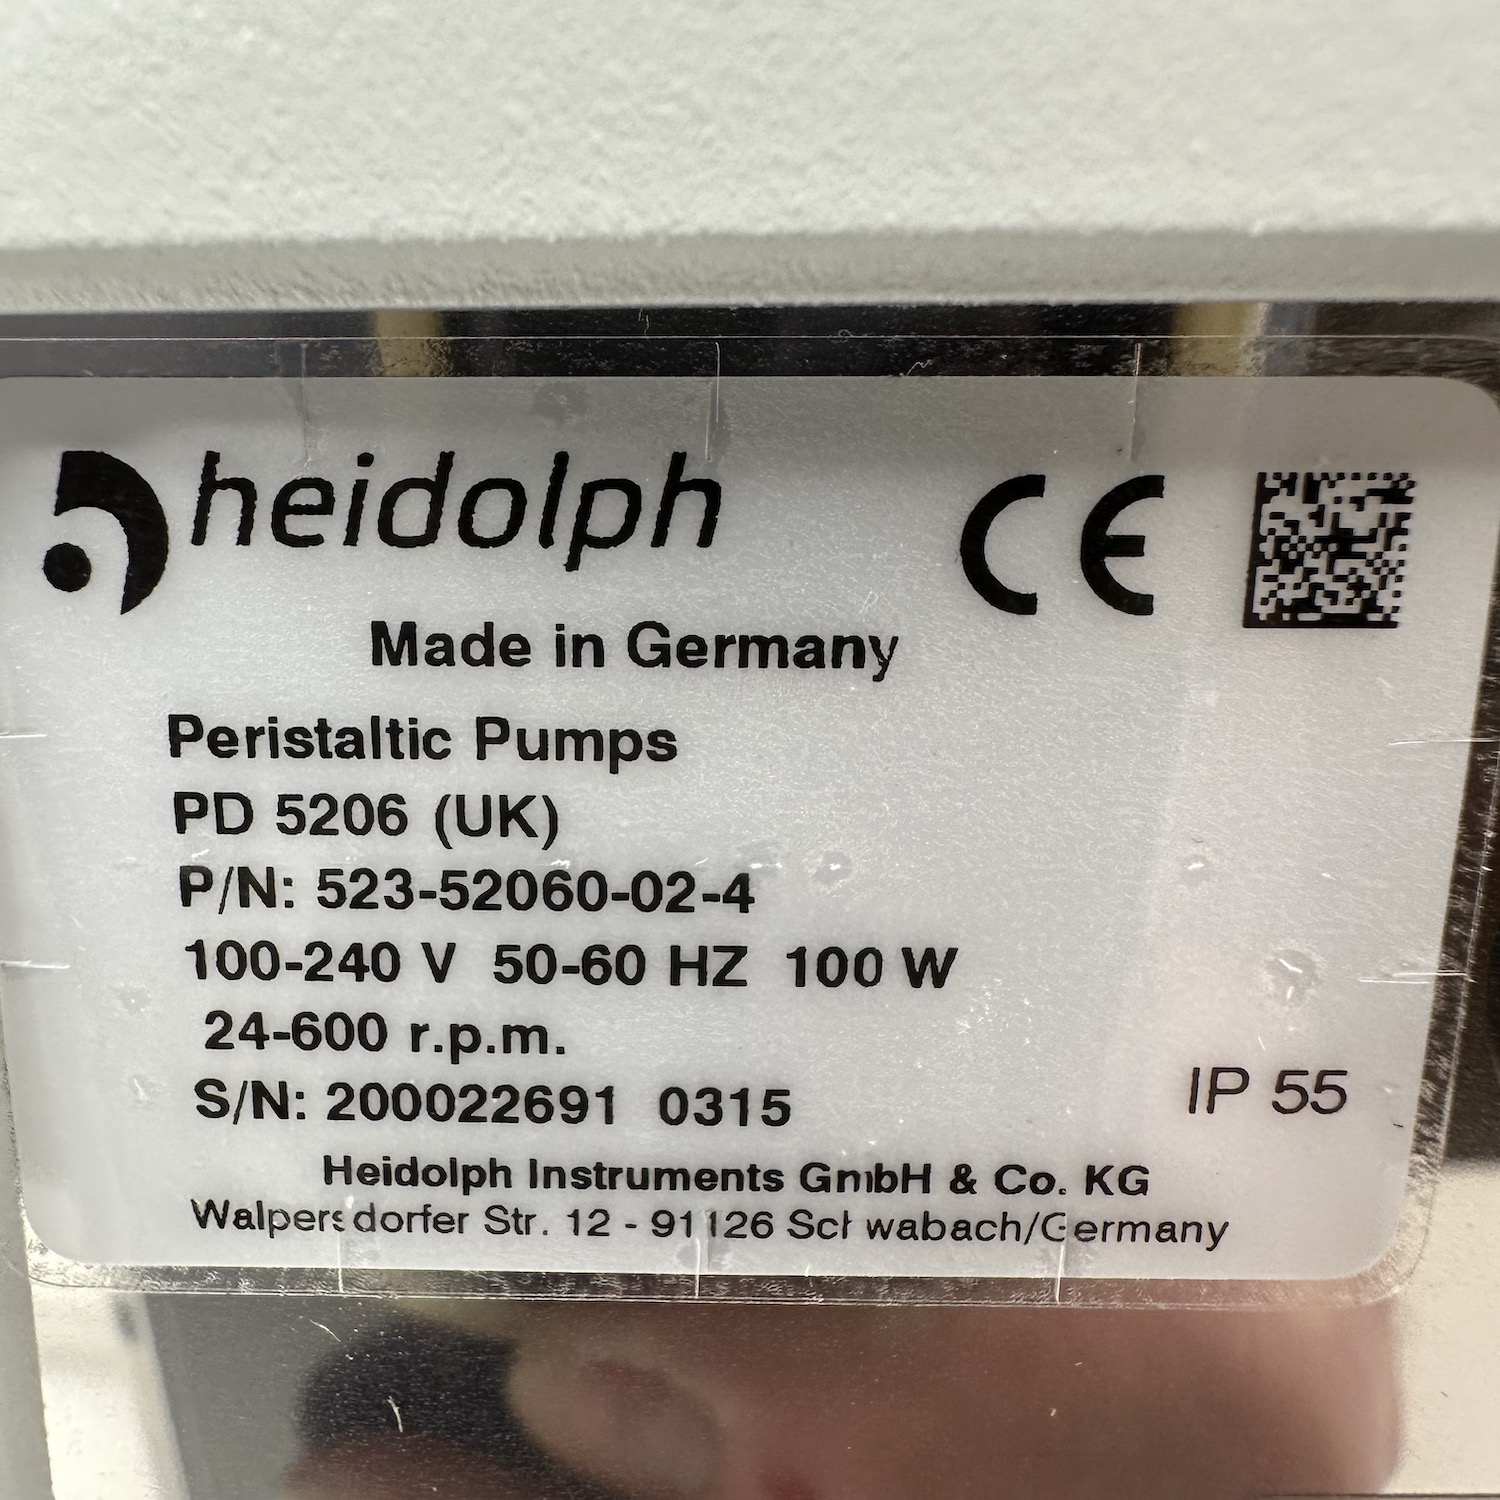 Heidolph Instruments : Peristaltikpumpen : Hei-FLOW Expert 600